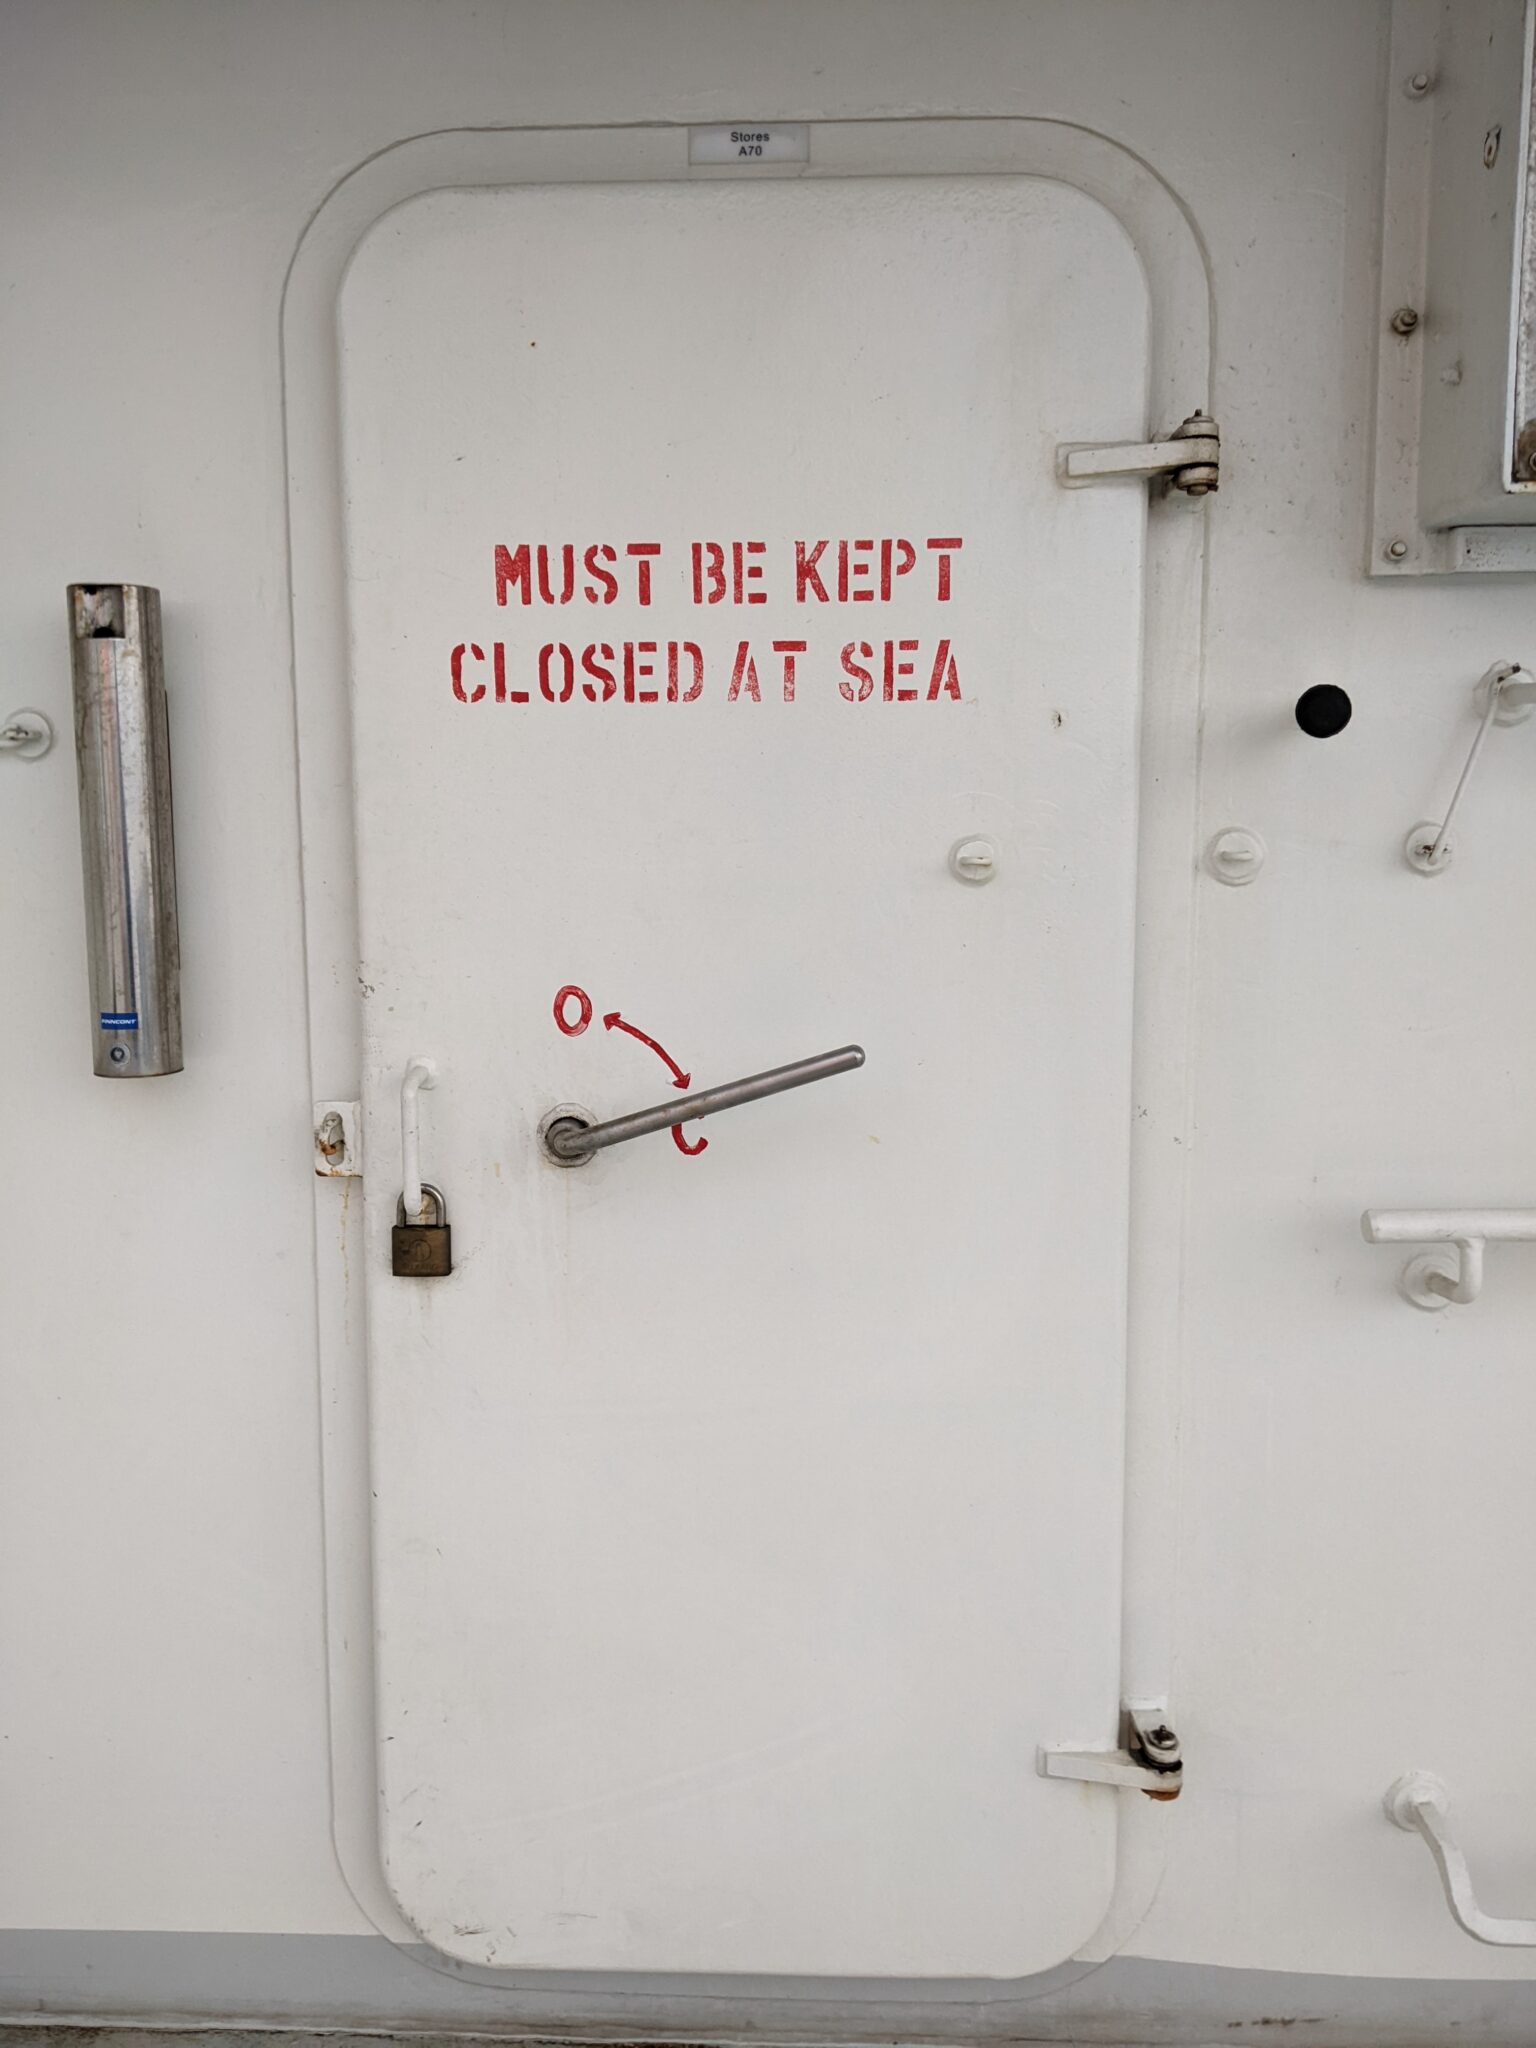 deur van schip met tekst 